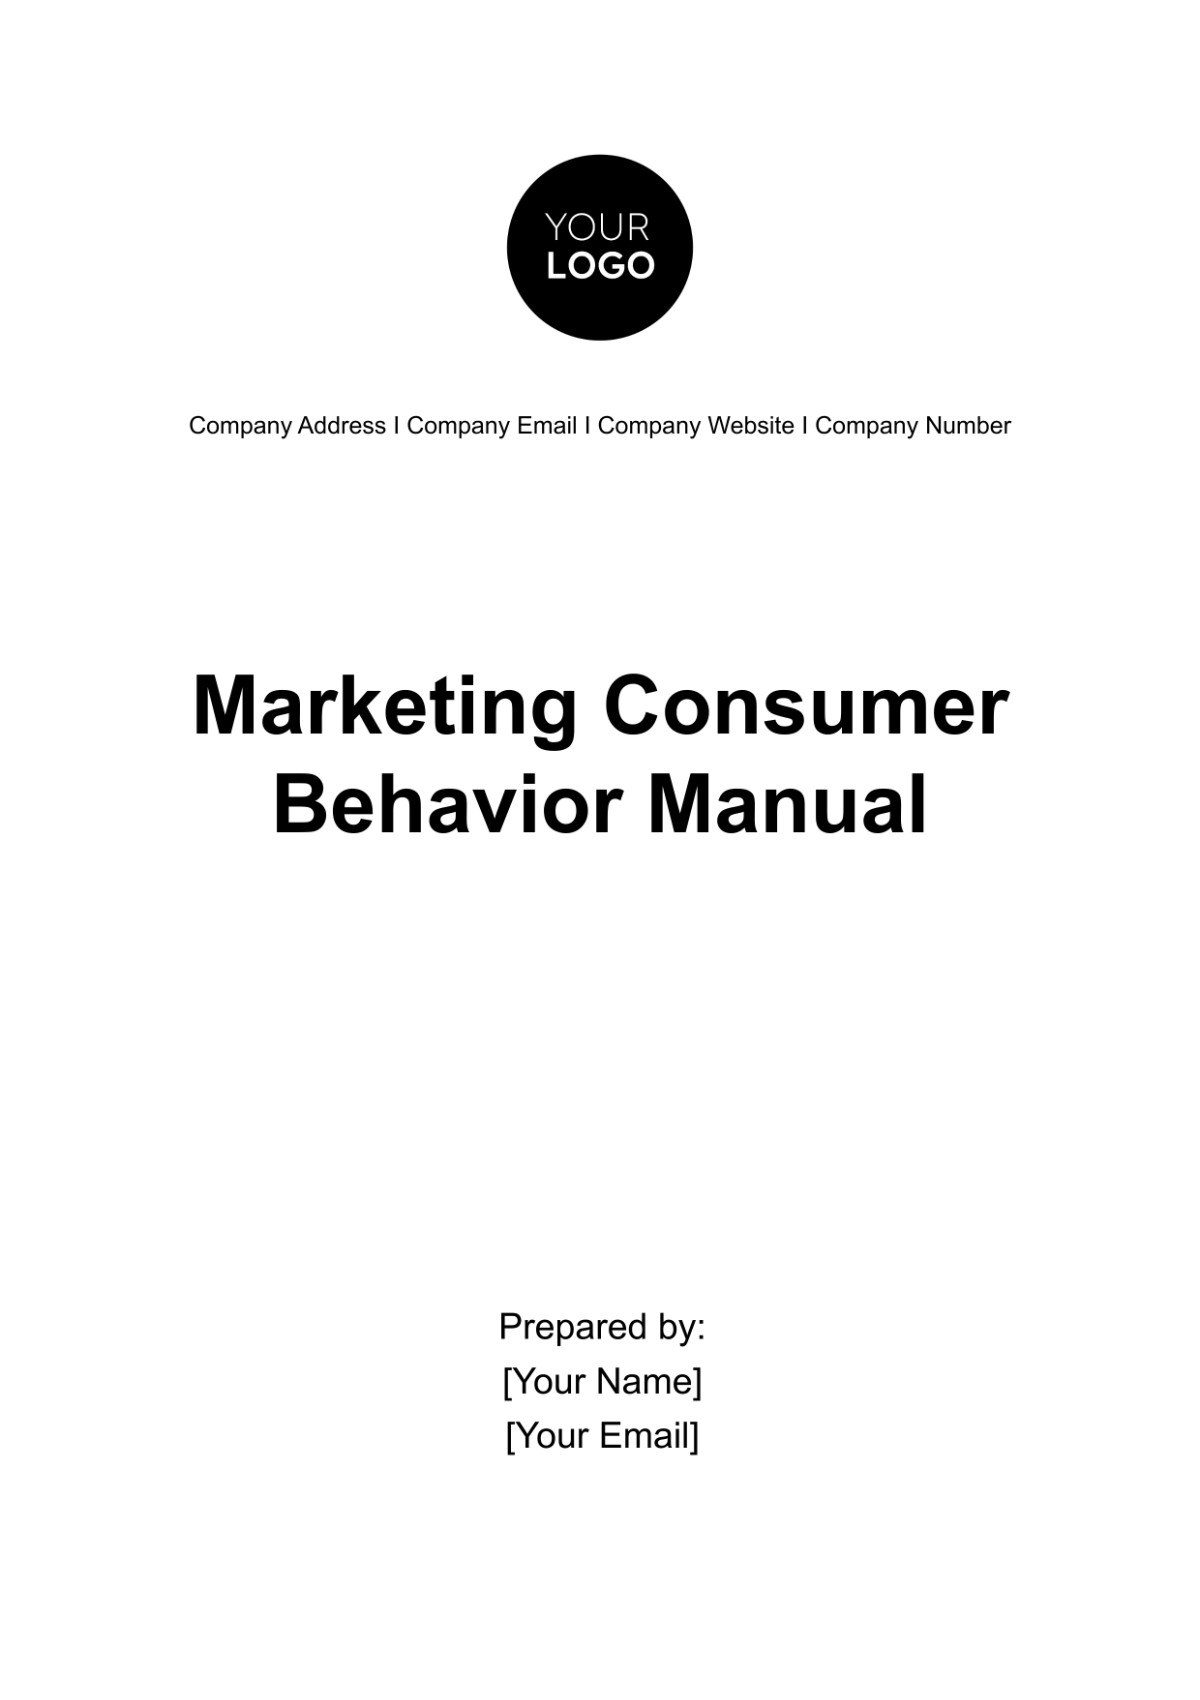 Free Marketing Consumer Behavior Manual Template